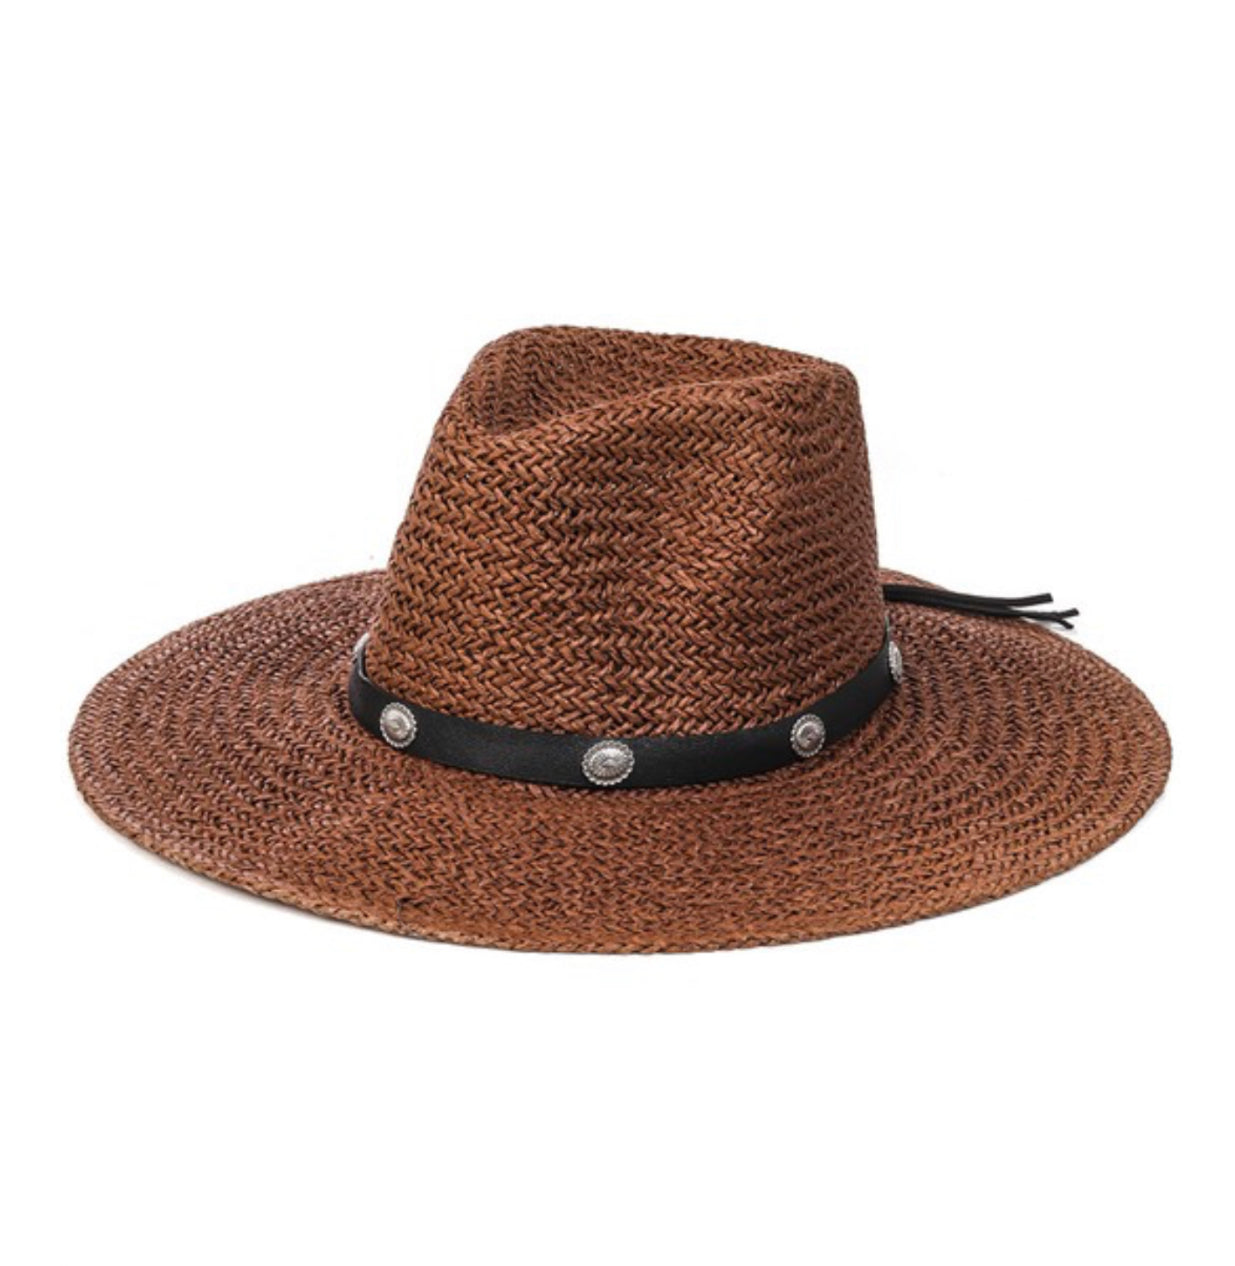 “Harlow” Straw Hat